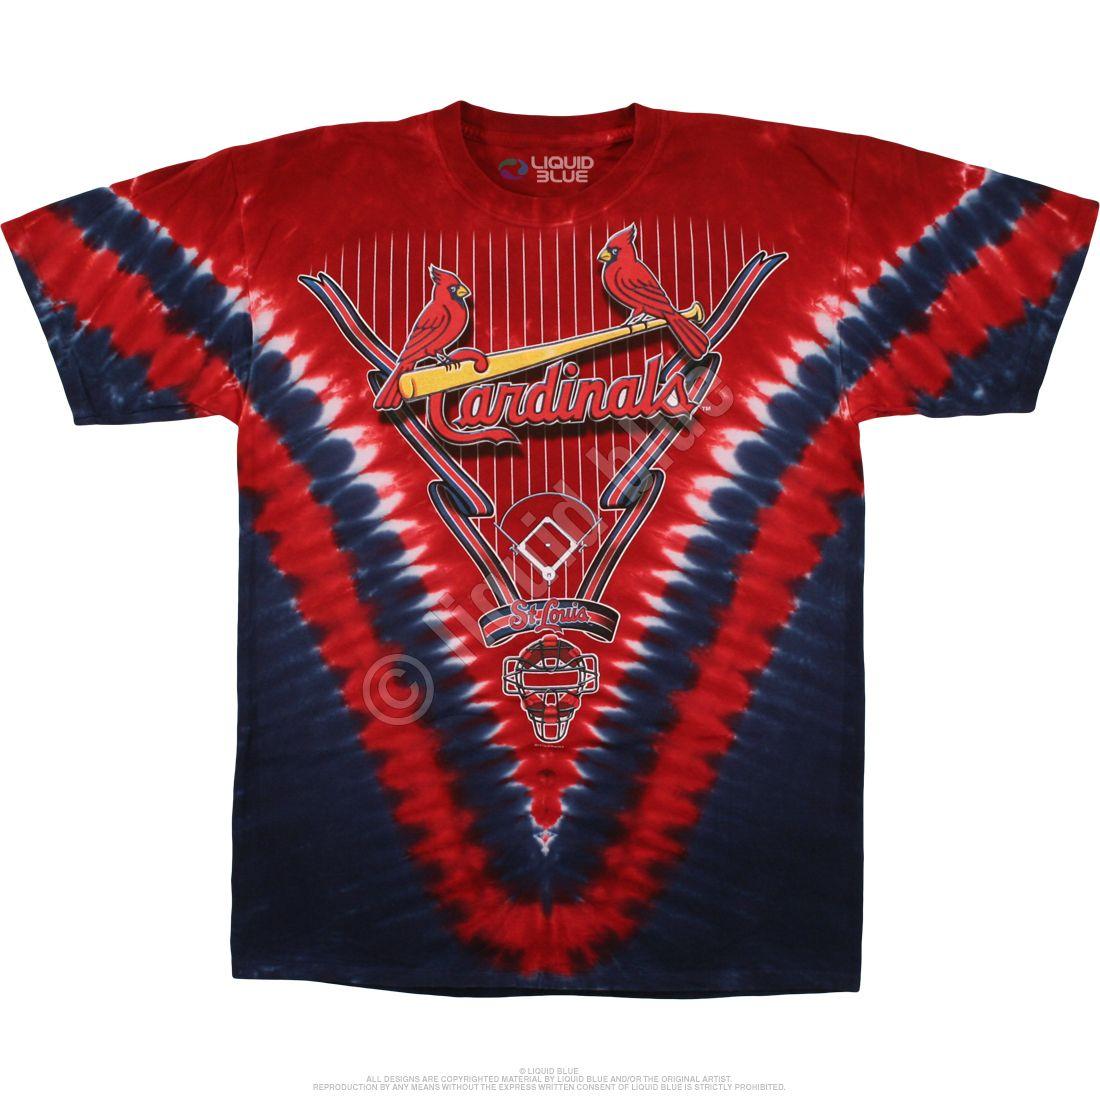 Liquid Blue and Red Logo - MLB St. Louis Cardinals V Tie-Dye T-Shirt Tee Liquid Blue